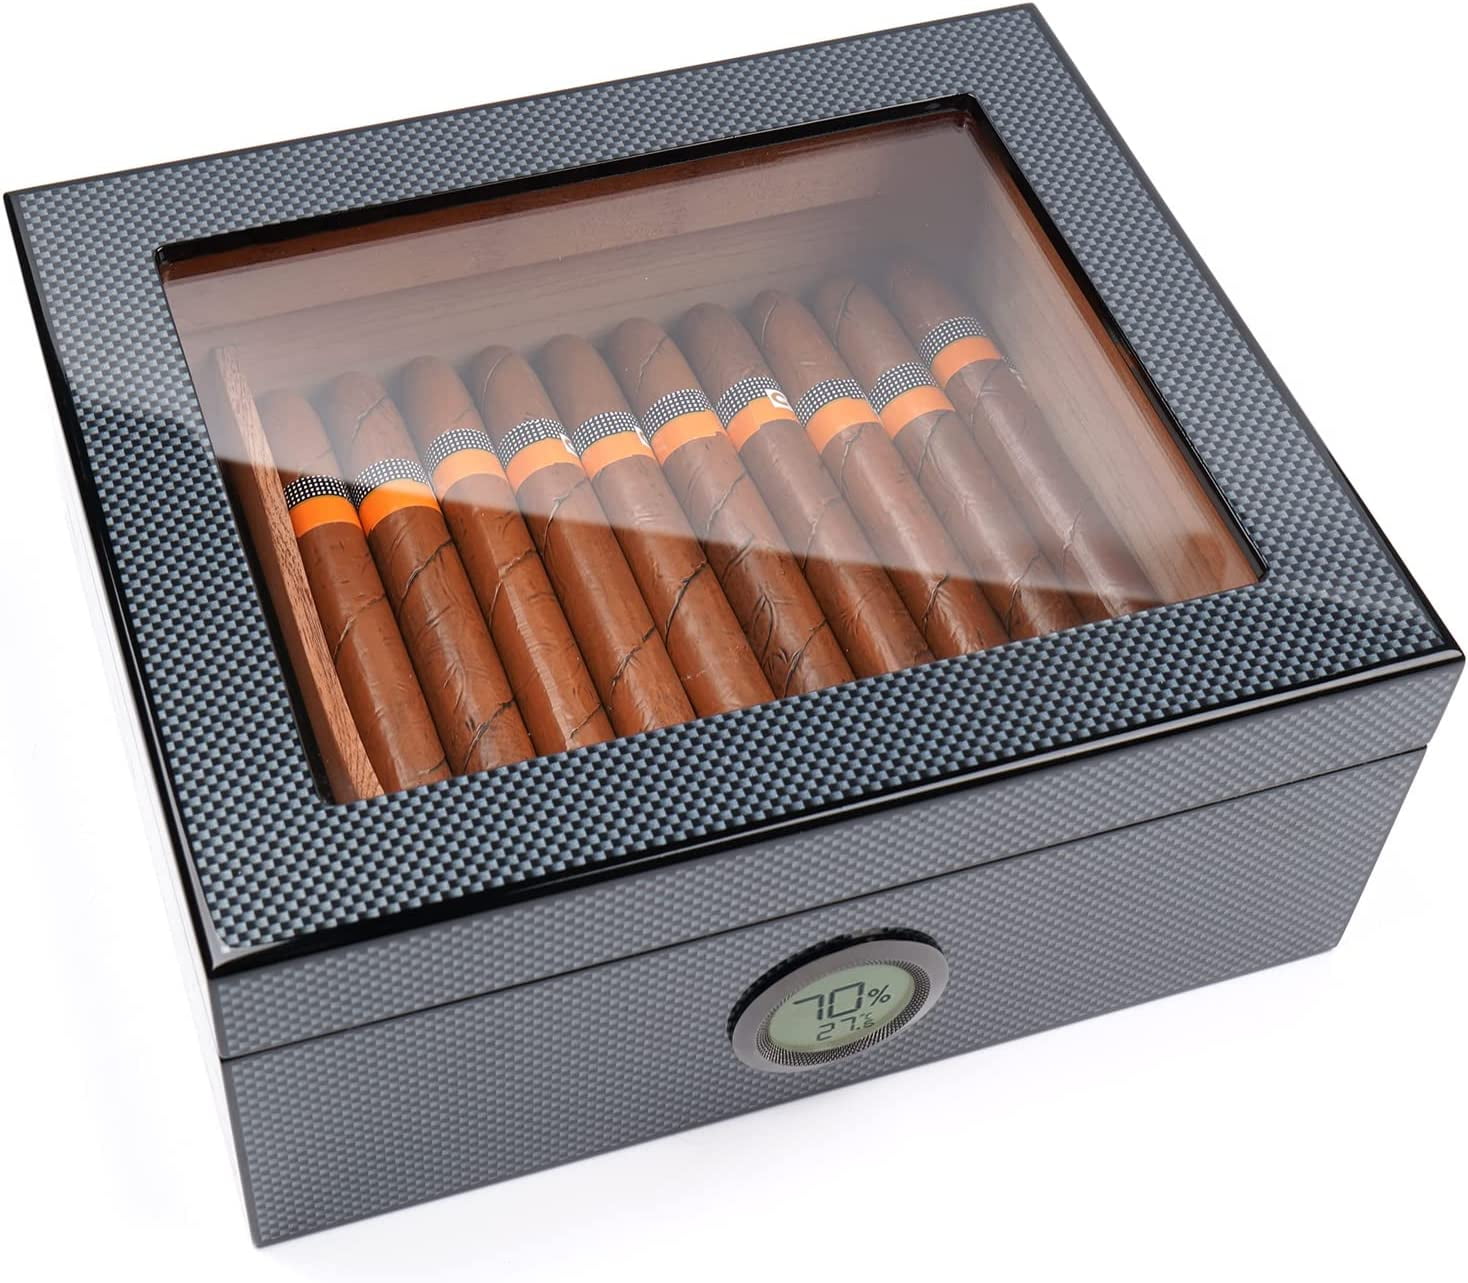 XIFEI humidor Cigar Display Box,Glass Window Handcrafted,Top Cover Dig